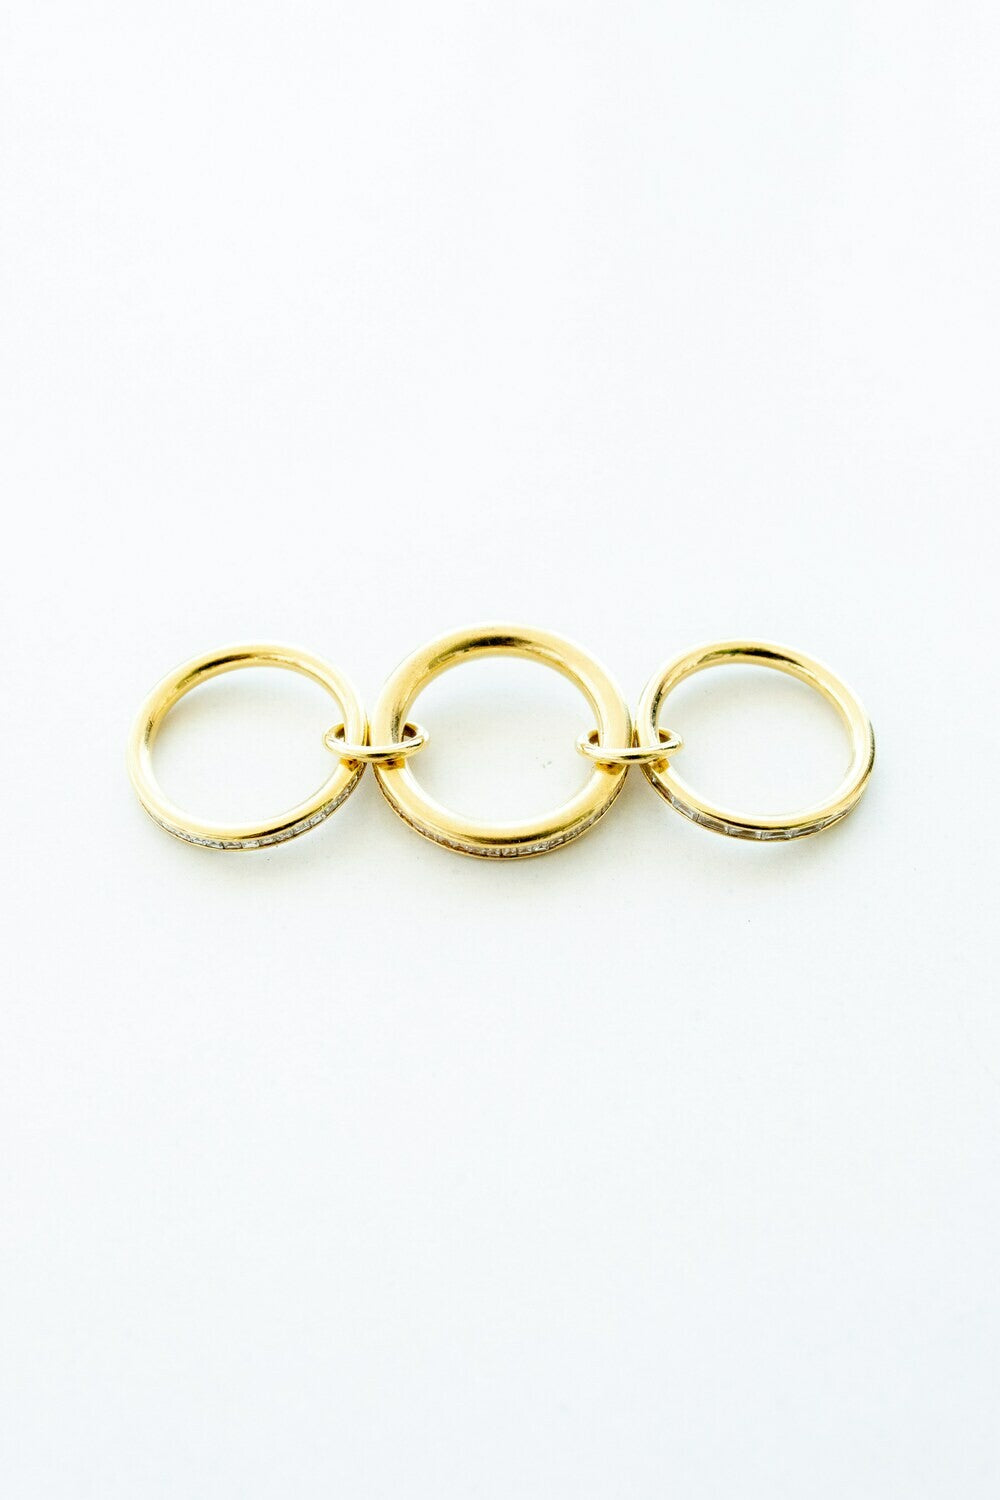 Spinelli-Kilcollin-manava-set-of-three-18k-yellow-gold-and-diamond-rings-amarees